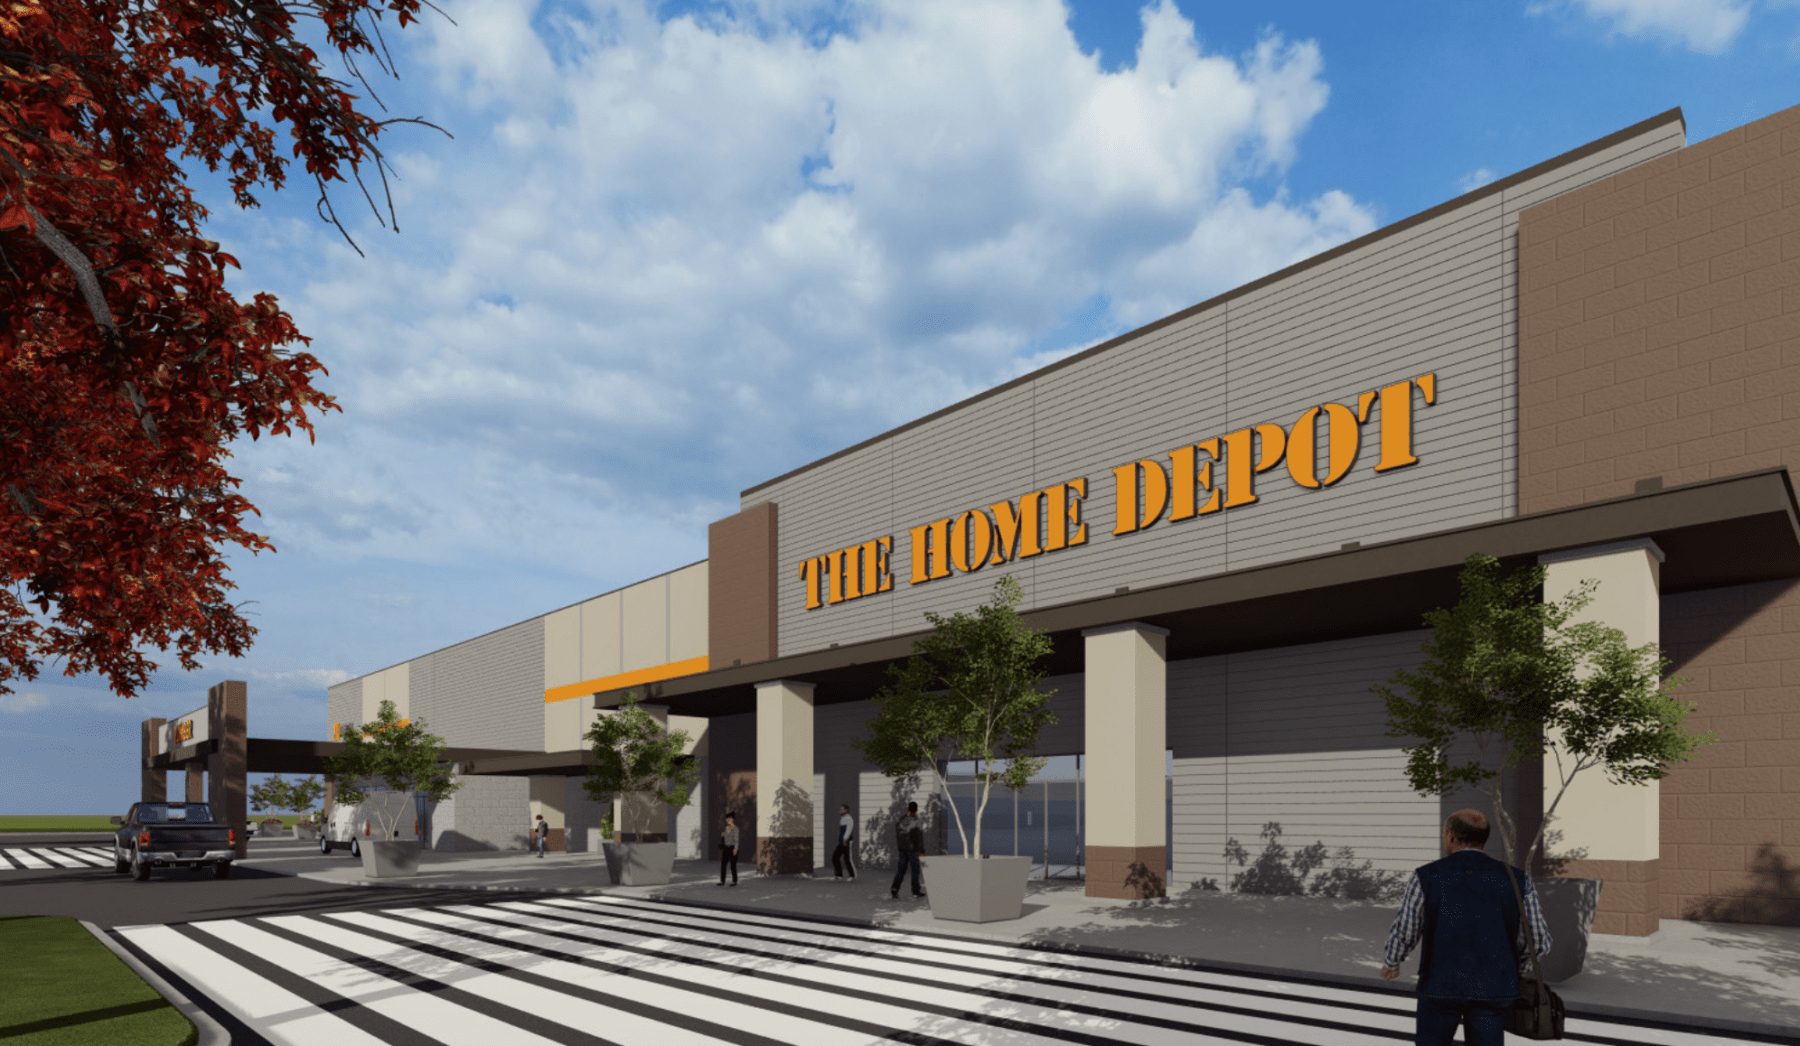 The Home Depot - Saratoga Springs, UT - Robinson Construction Co.